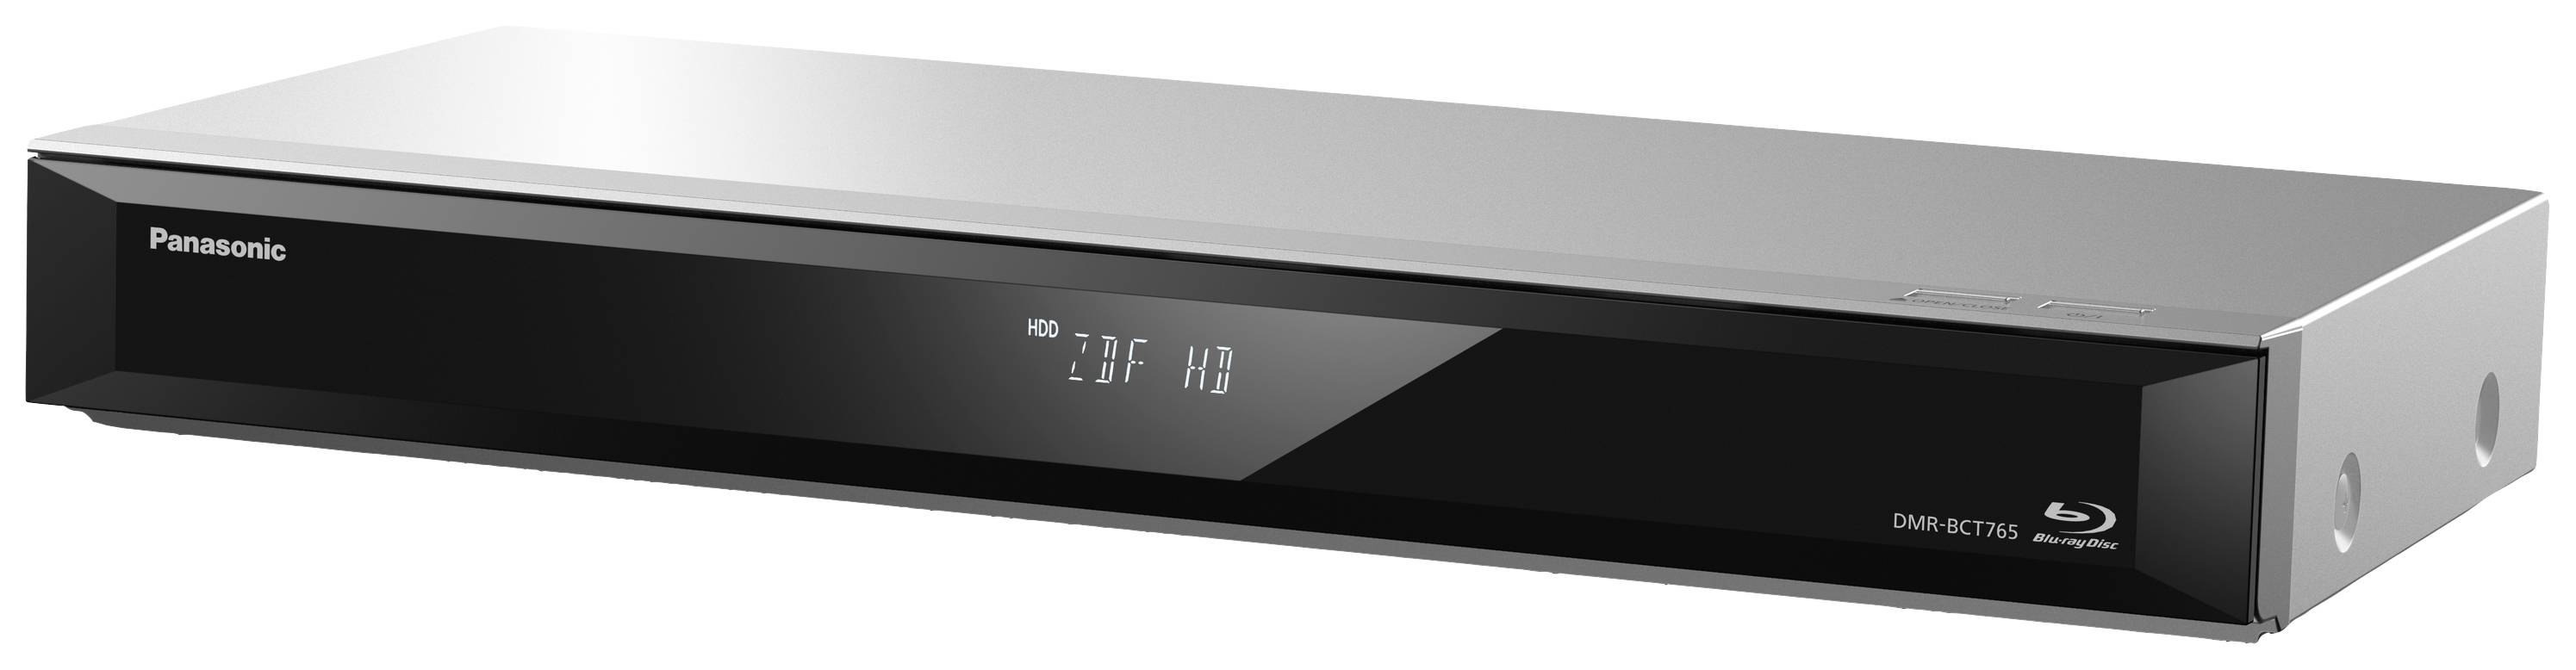 Panasonic DMR-BCT765AG Blu-ray-Player mit Festplattenrecorder Twi GB Upscaling, Audio, CD-Player, 4K High-Resolution 500 kaufen